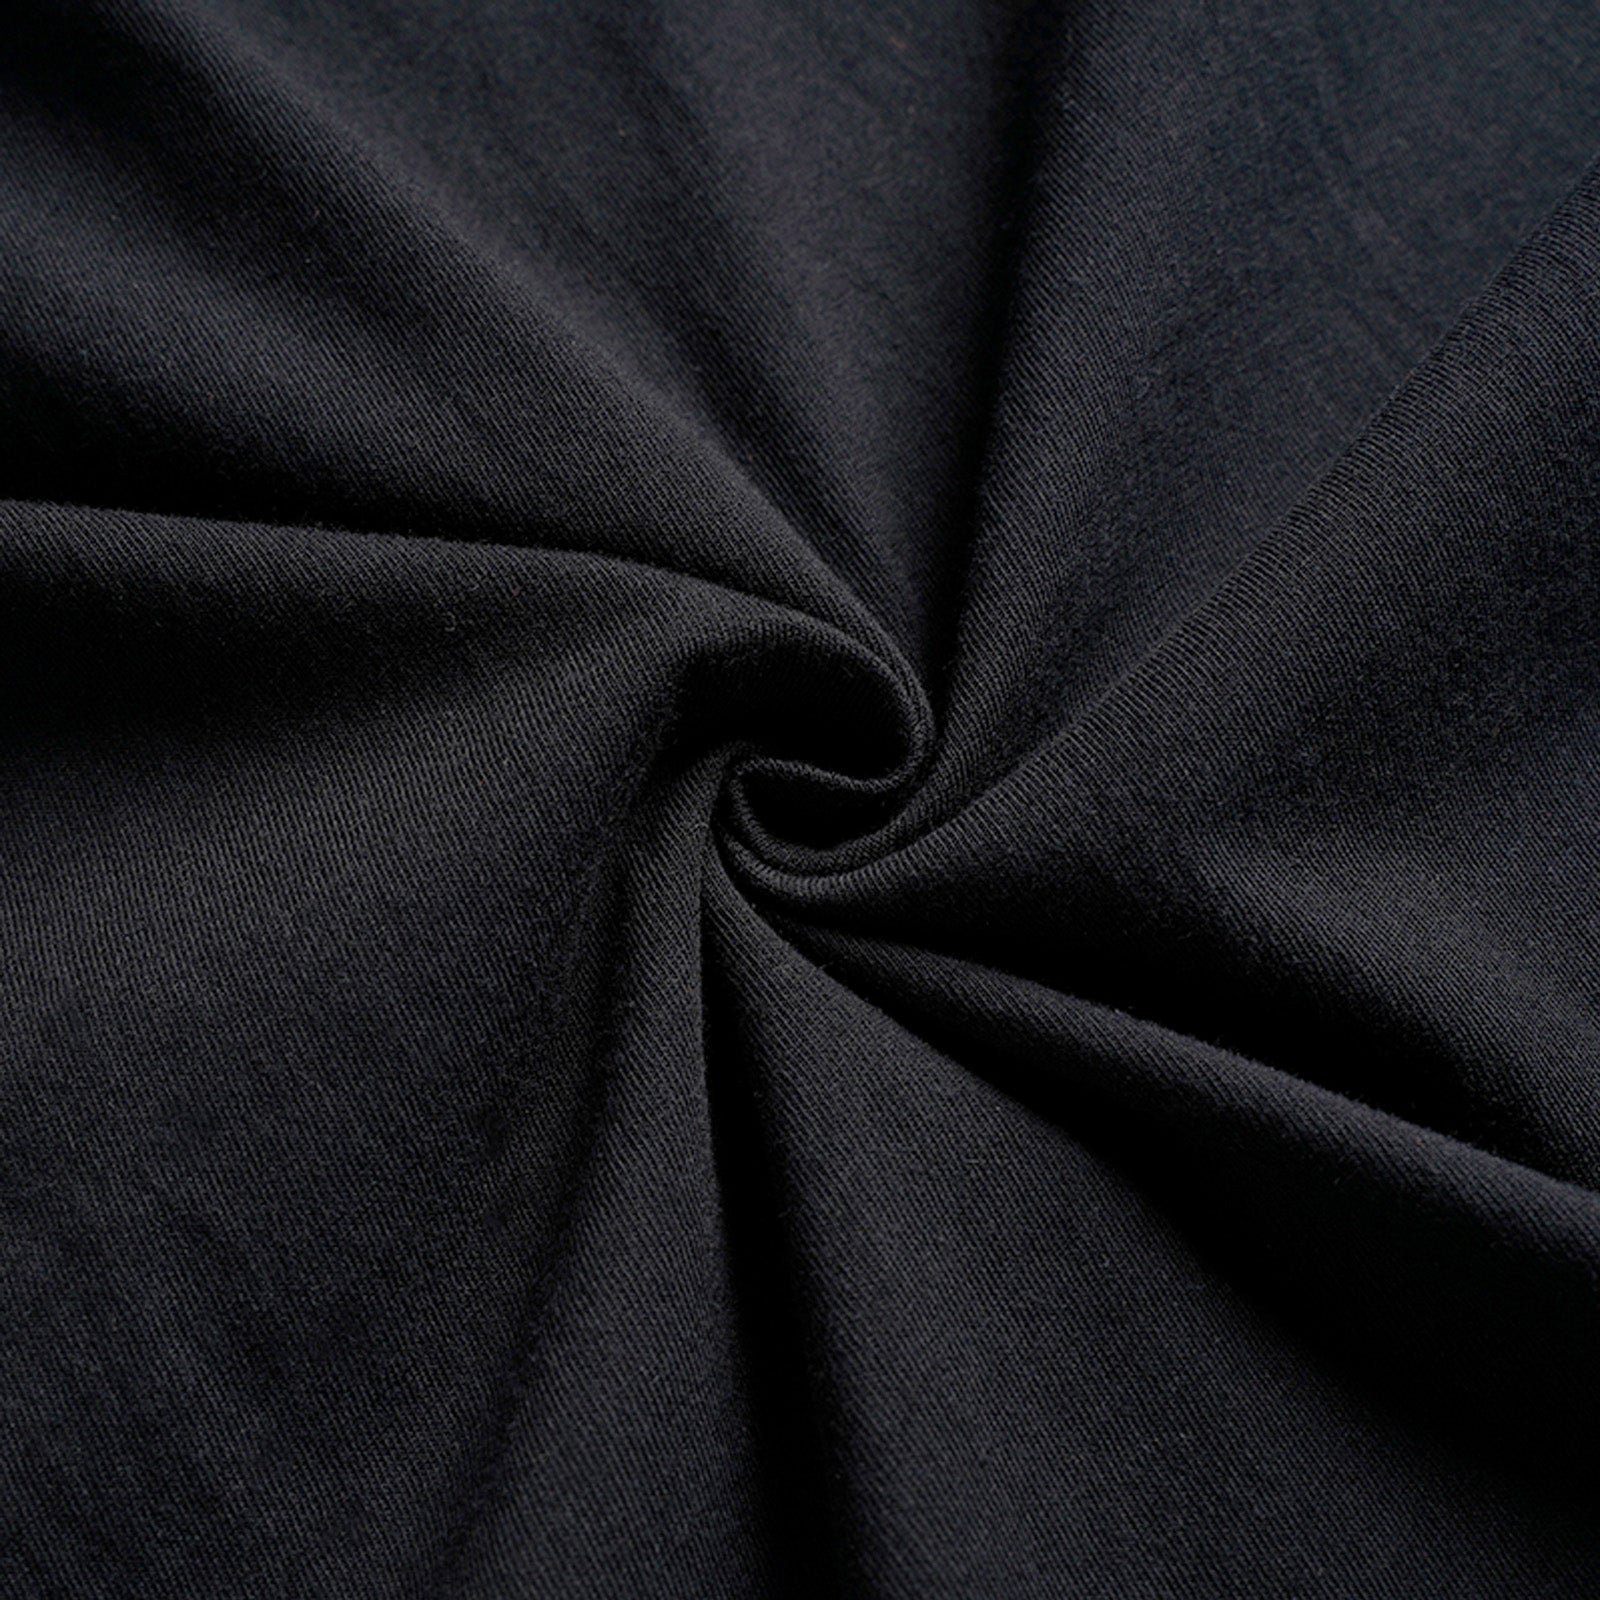 Uprandy Stylish Devil Print Black T-Shirt - chicyea